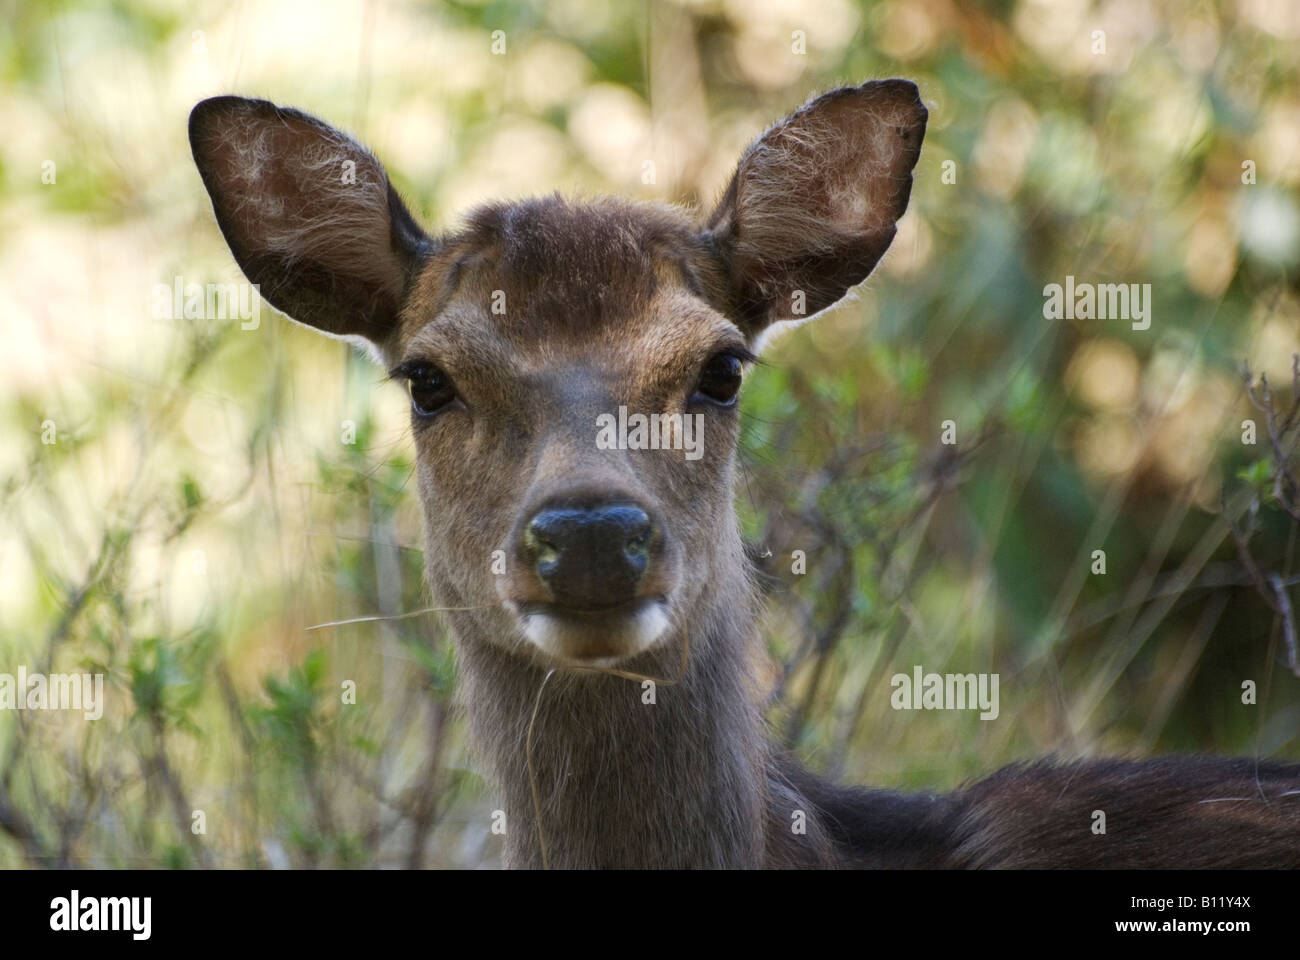 Sika Deer at Arne RSPB Nature Reserve Dorset Stock Photo